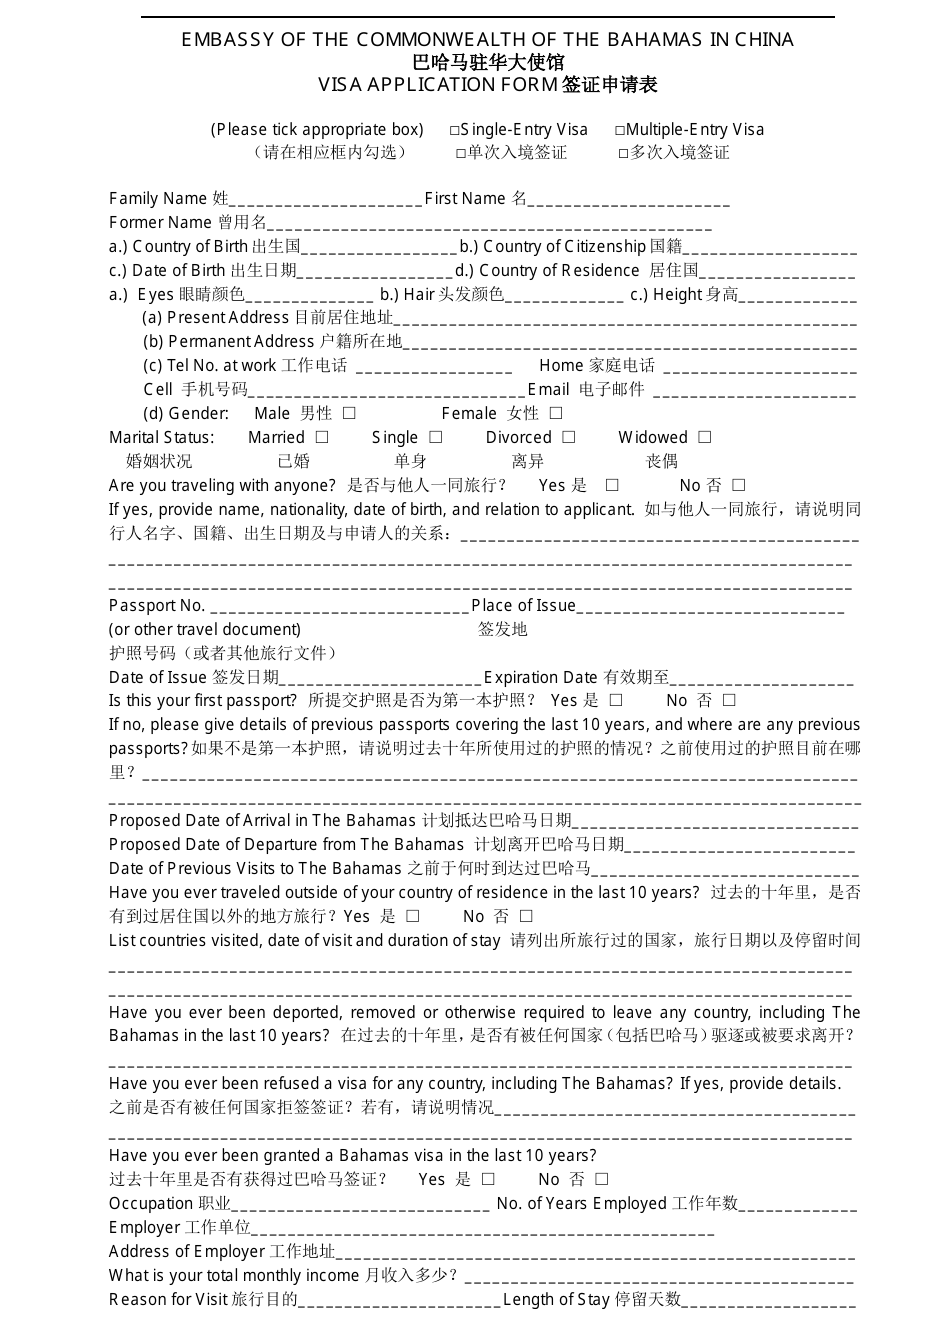 Bahamas Visa Application Form - Embassy of the Commonwealth of the Bahamas - China (English / Chinese), Page 1